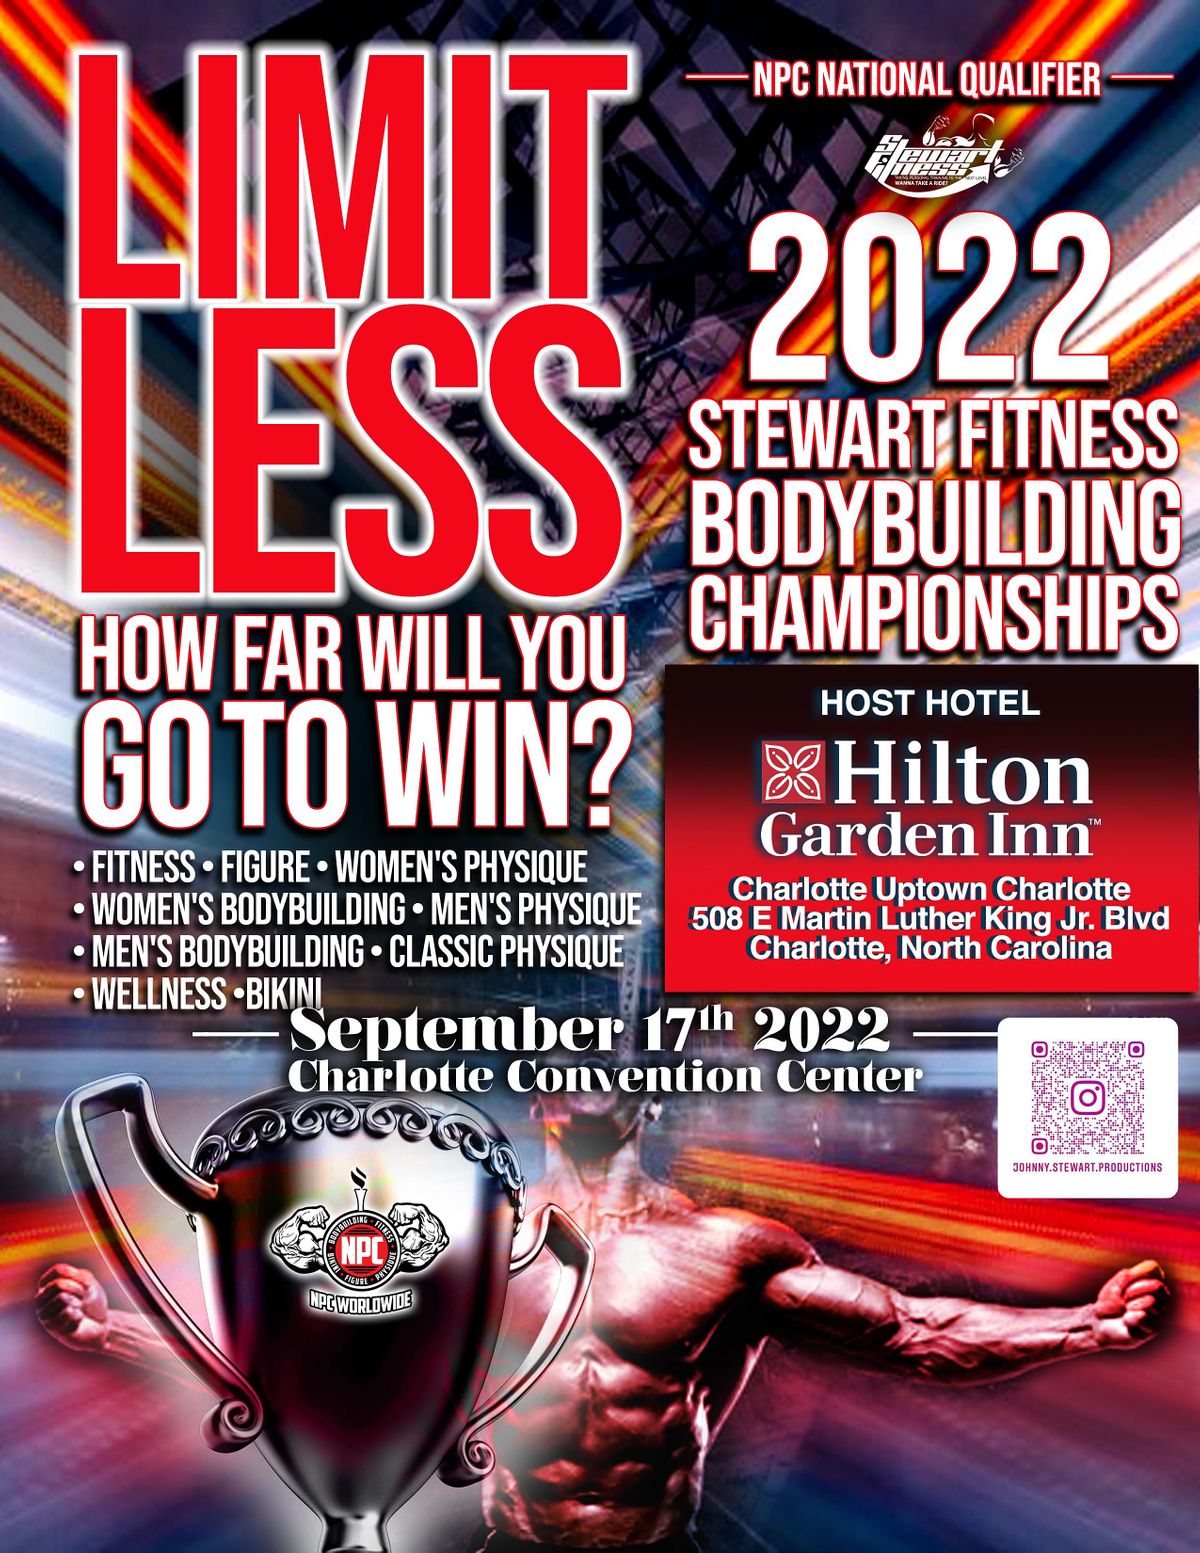 2022 NPC Stewart Fitness Bodybuilding Championship - Prejudging